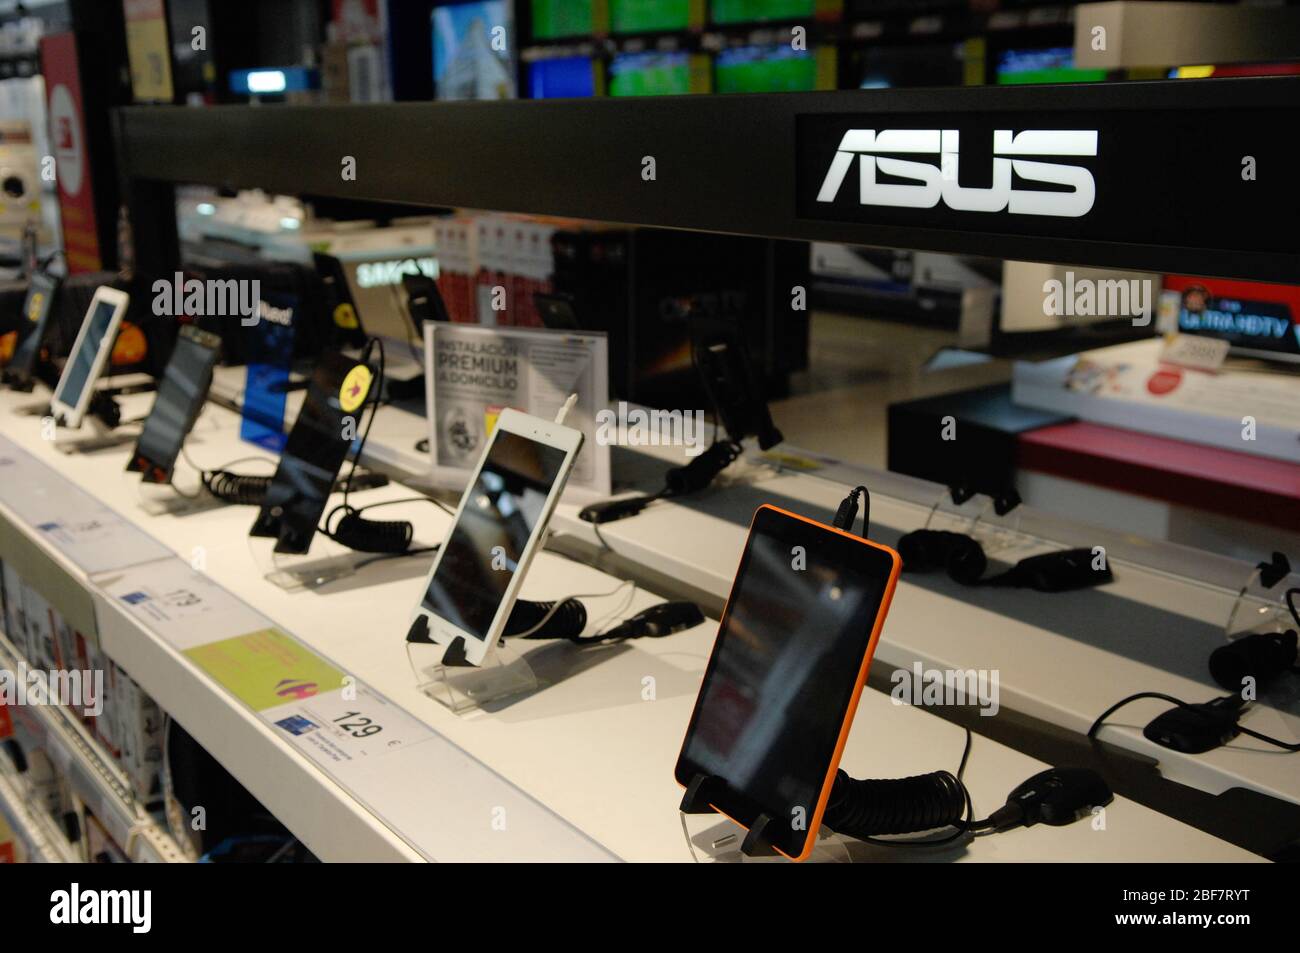 Asus, electronics,technology Stock Photo